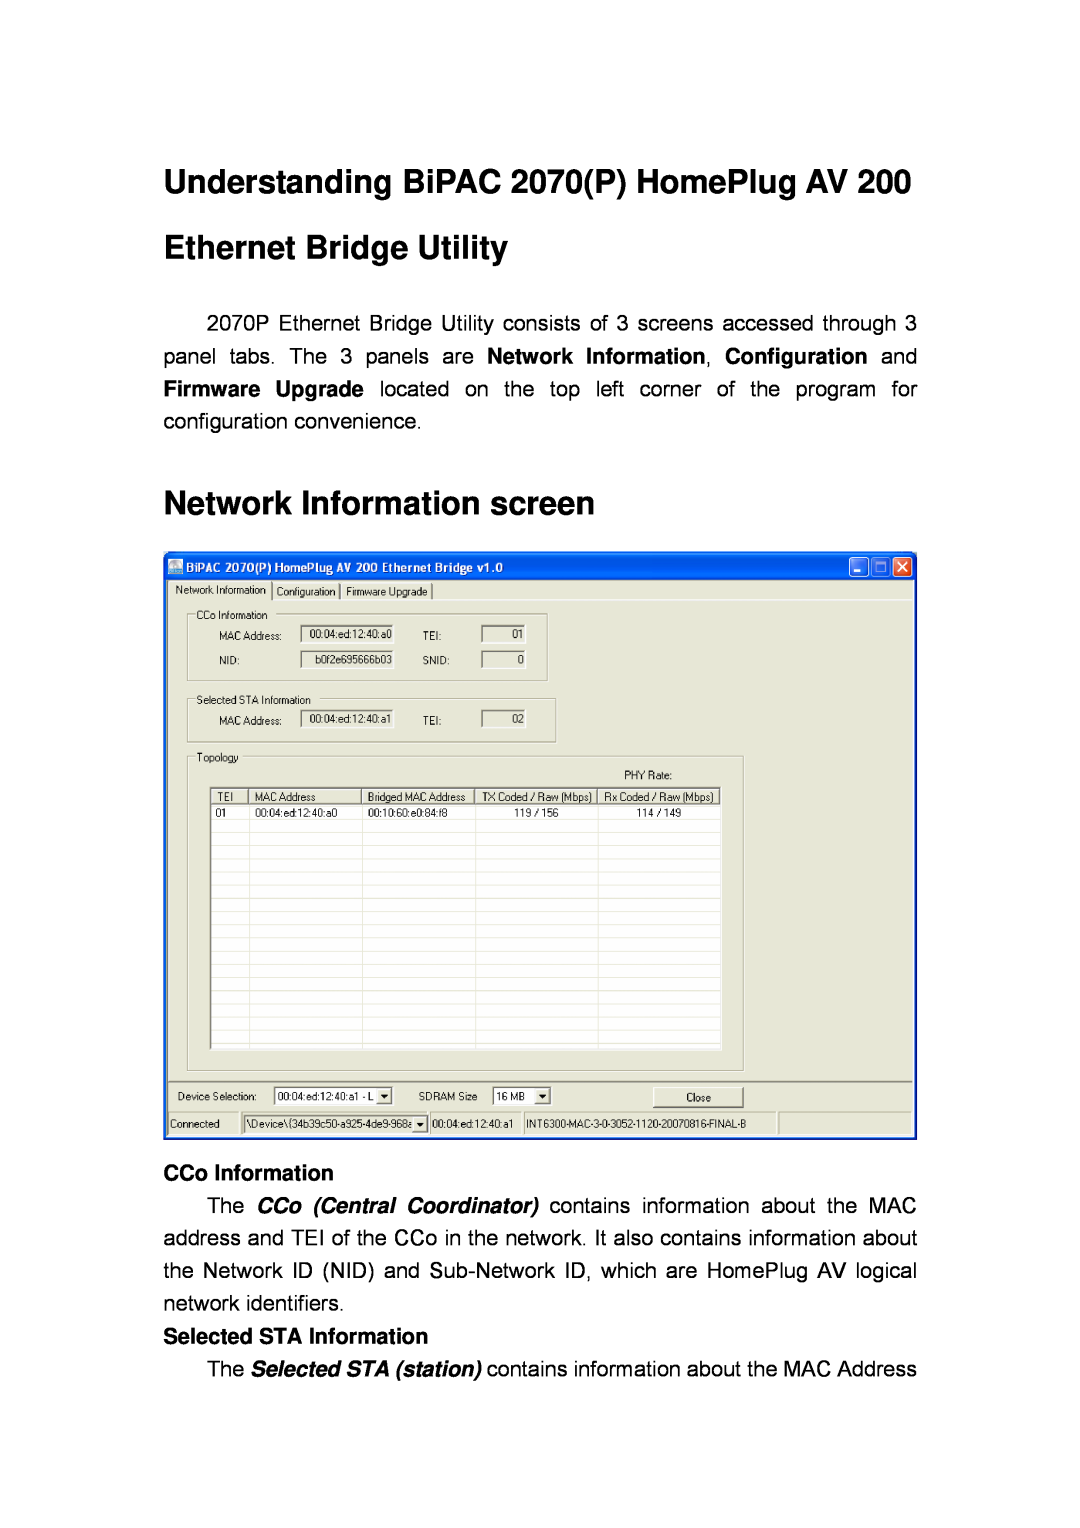 Billion Electric Company 2070 (P) Understanding BiPAC 2070P HomePlug AV Ethernet Bridge Utility, CCo Information 